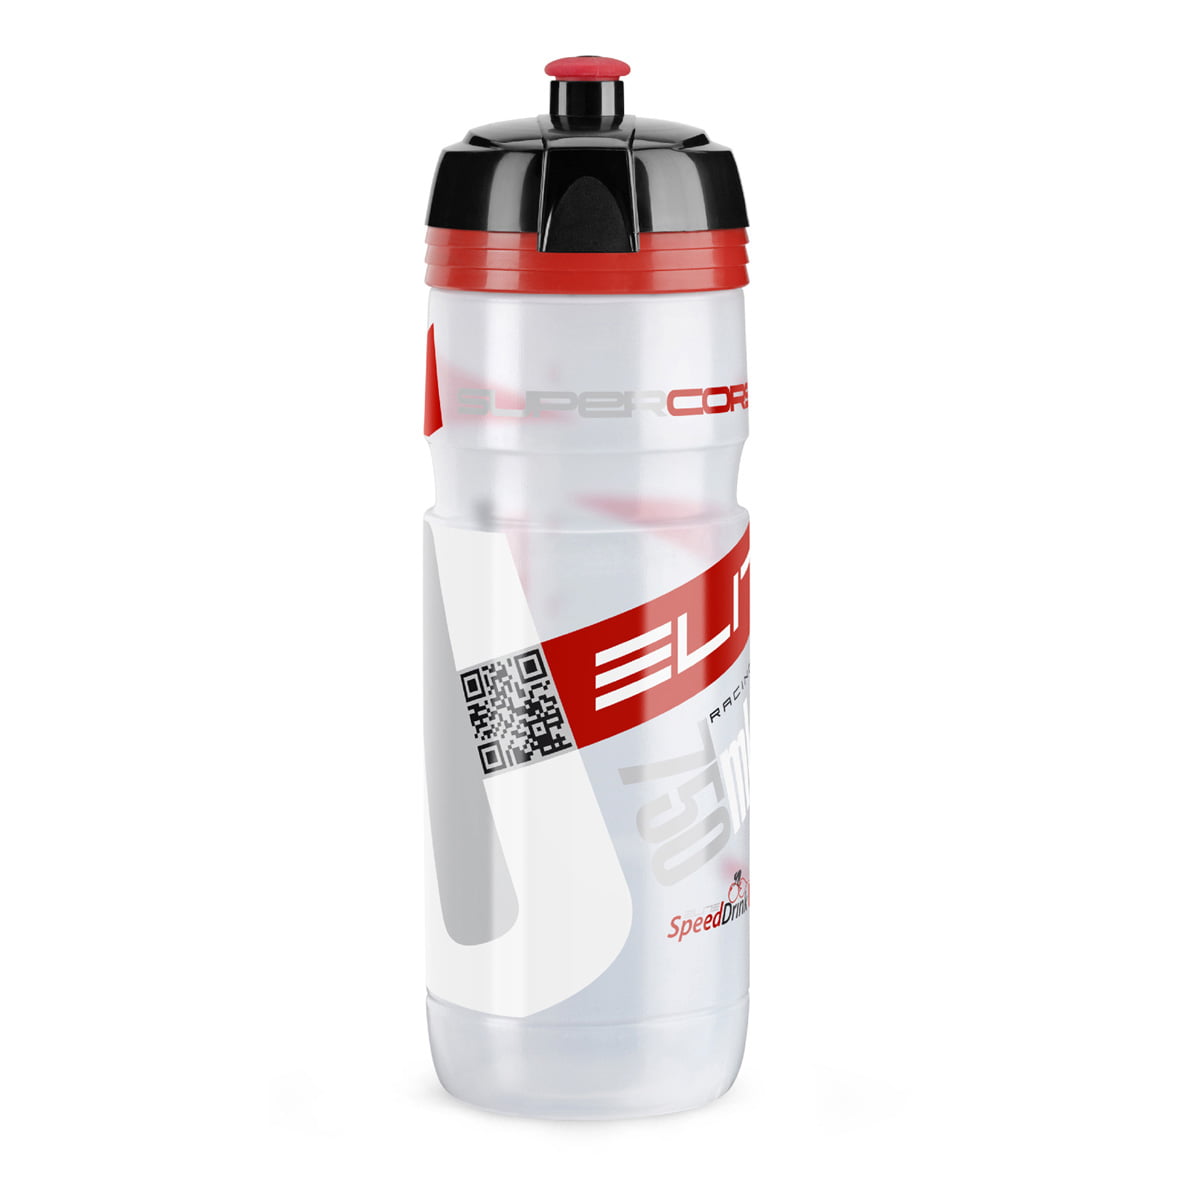 Elite Super Corsa Bicycle Water Bottle - 750ml - Walmart.com